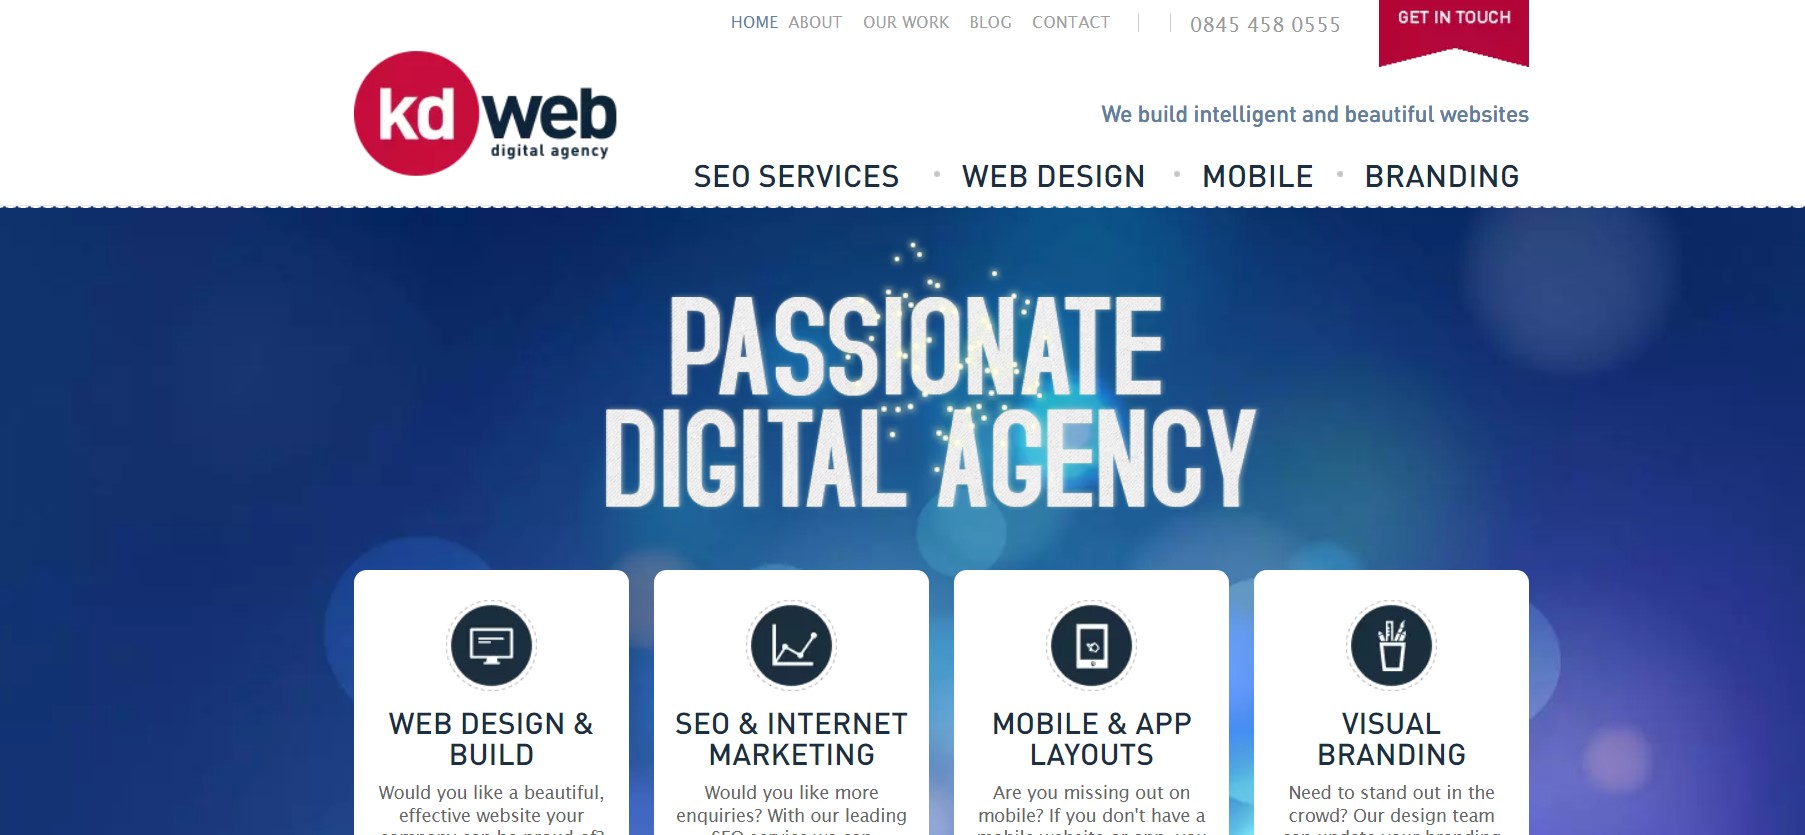 KD Web Ltd